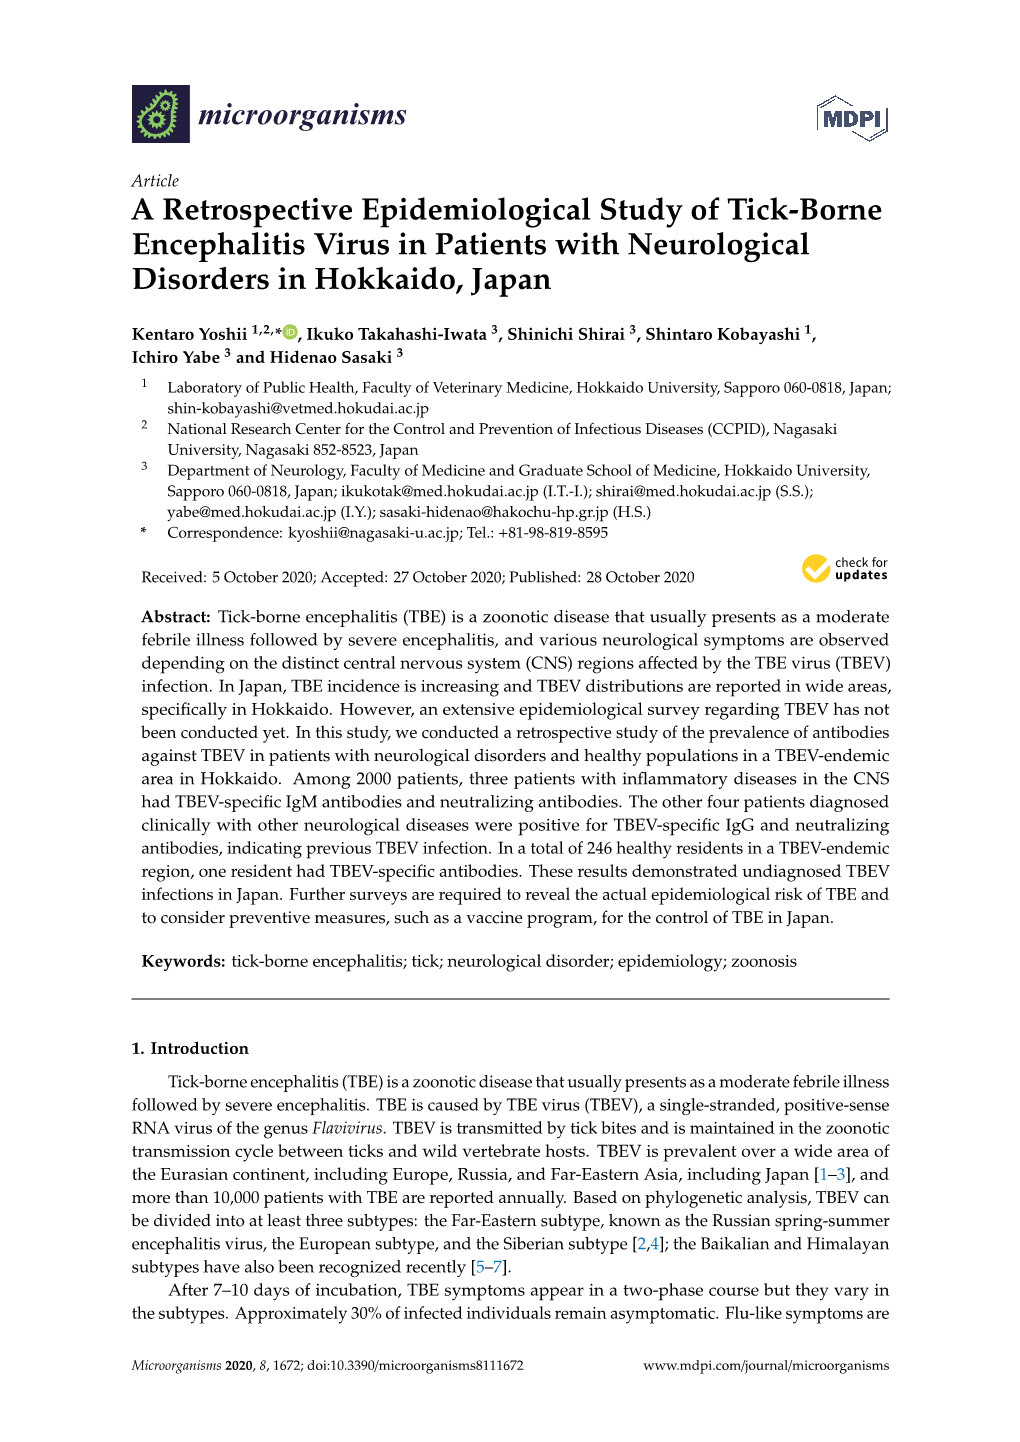 A Retrospective Epidemiological Study of Tick-Borne Encephalitis Virus in Patients with Neurological Disorders in Hokkaido, Japan